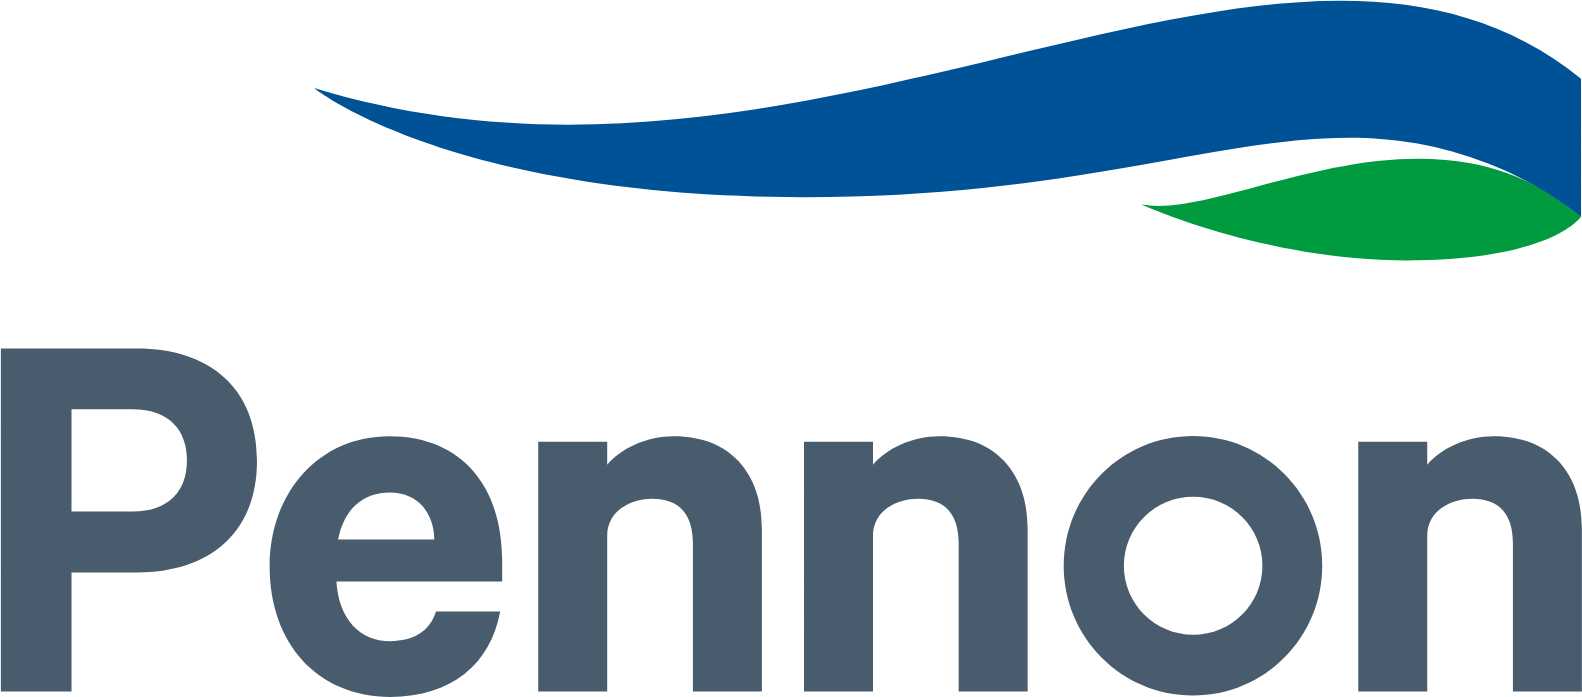 Pennon Group logo large (transparent PNG)